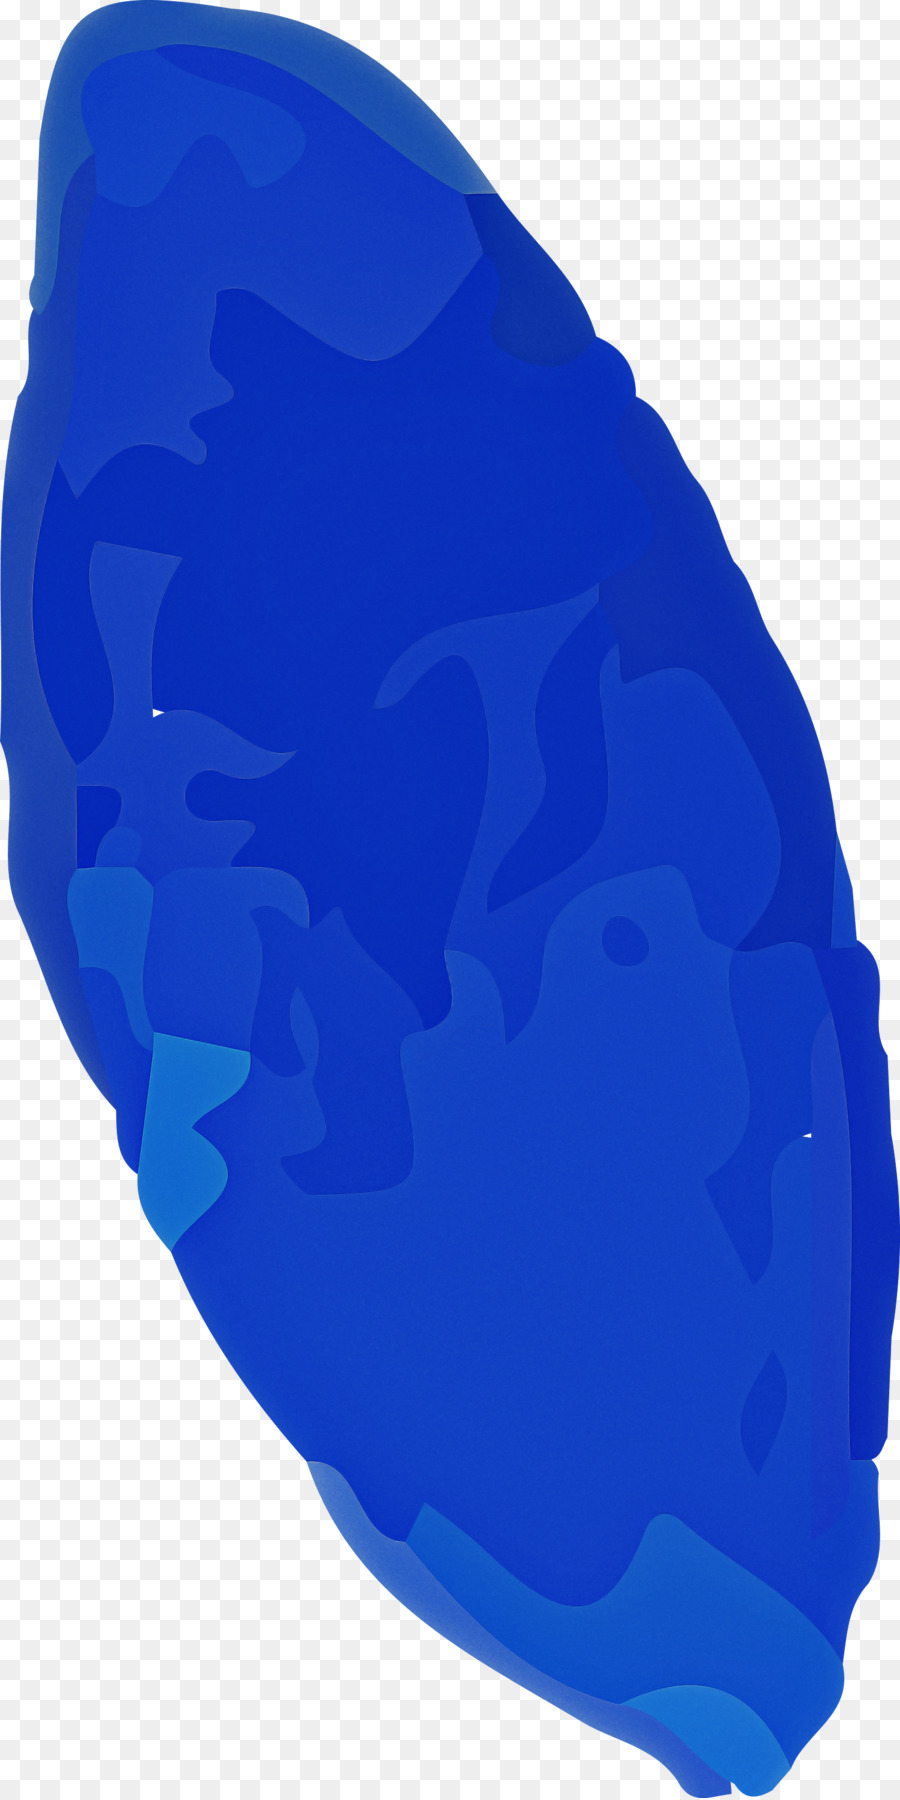 blu cobalto viola microsoft azzurro blu cobalto - 